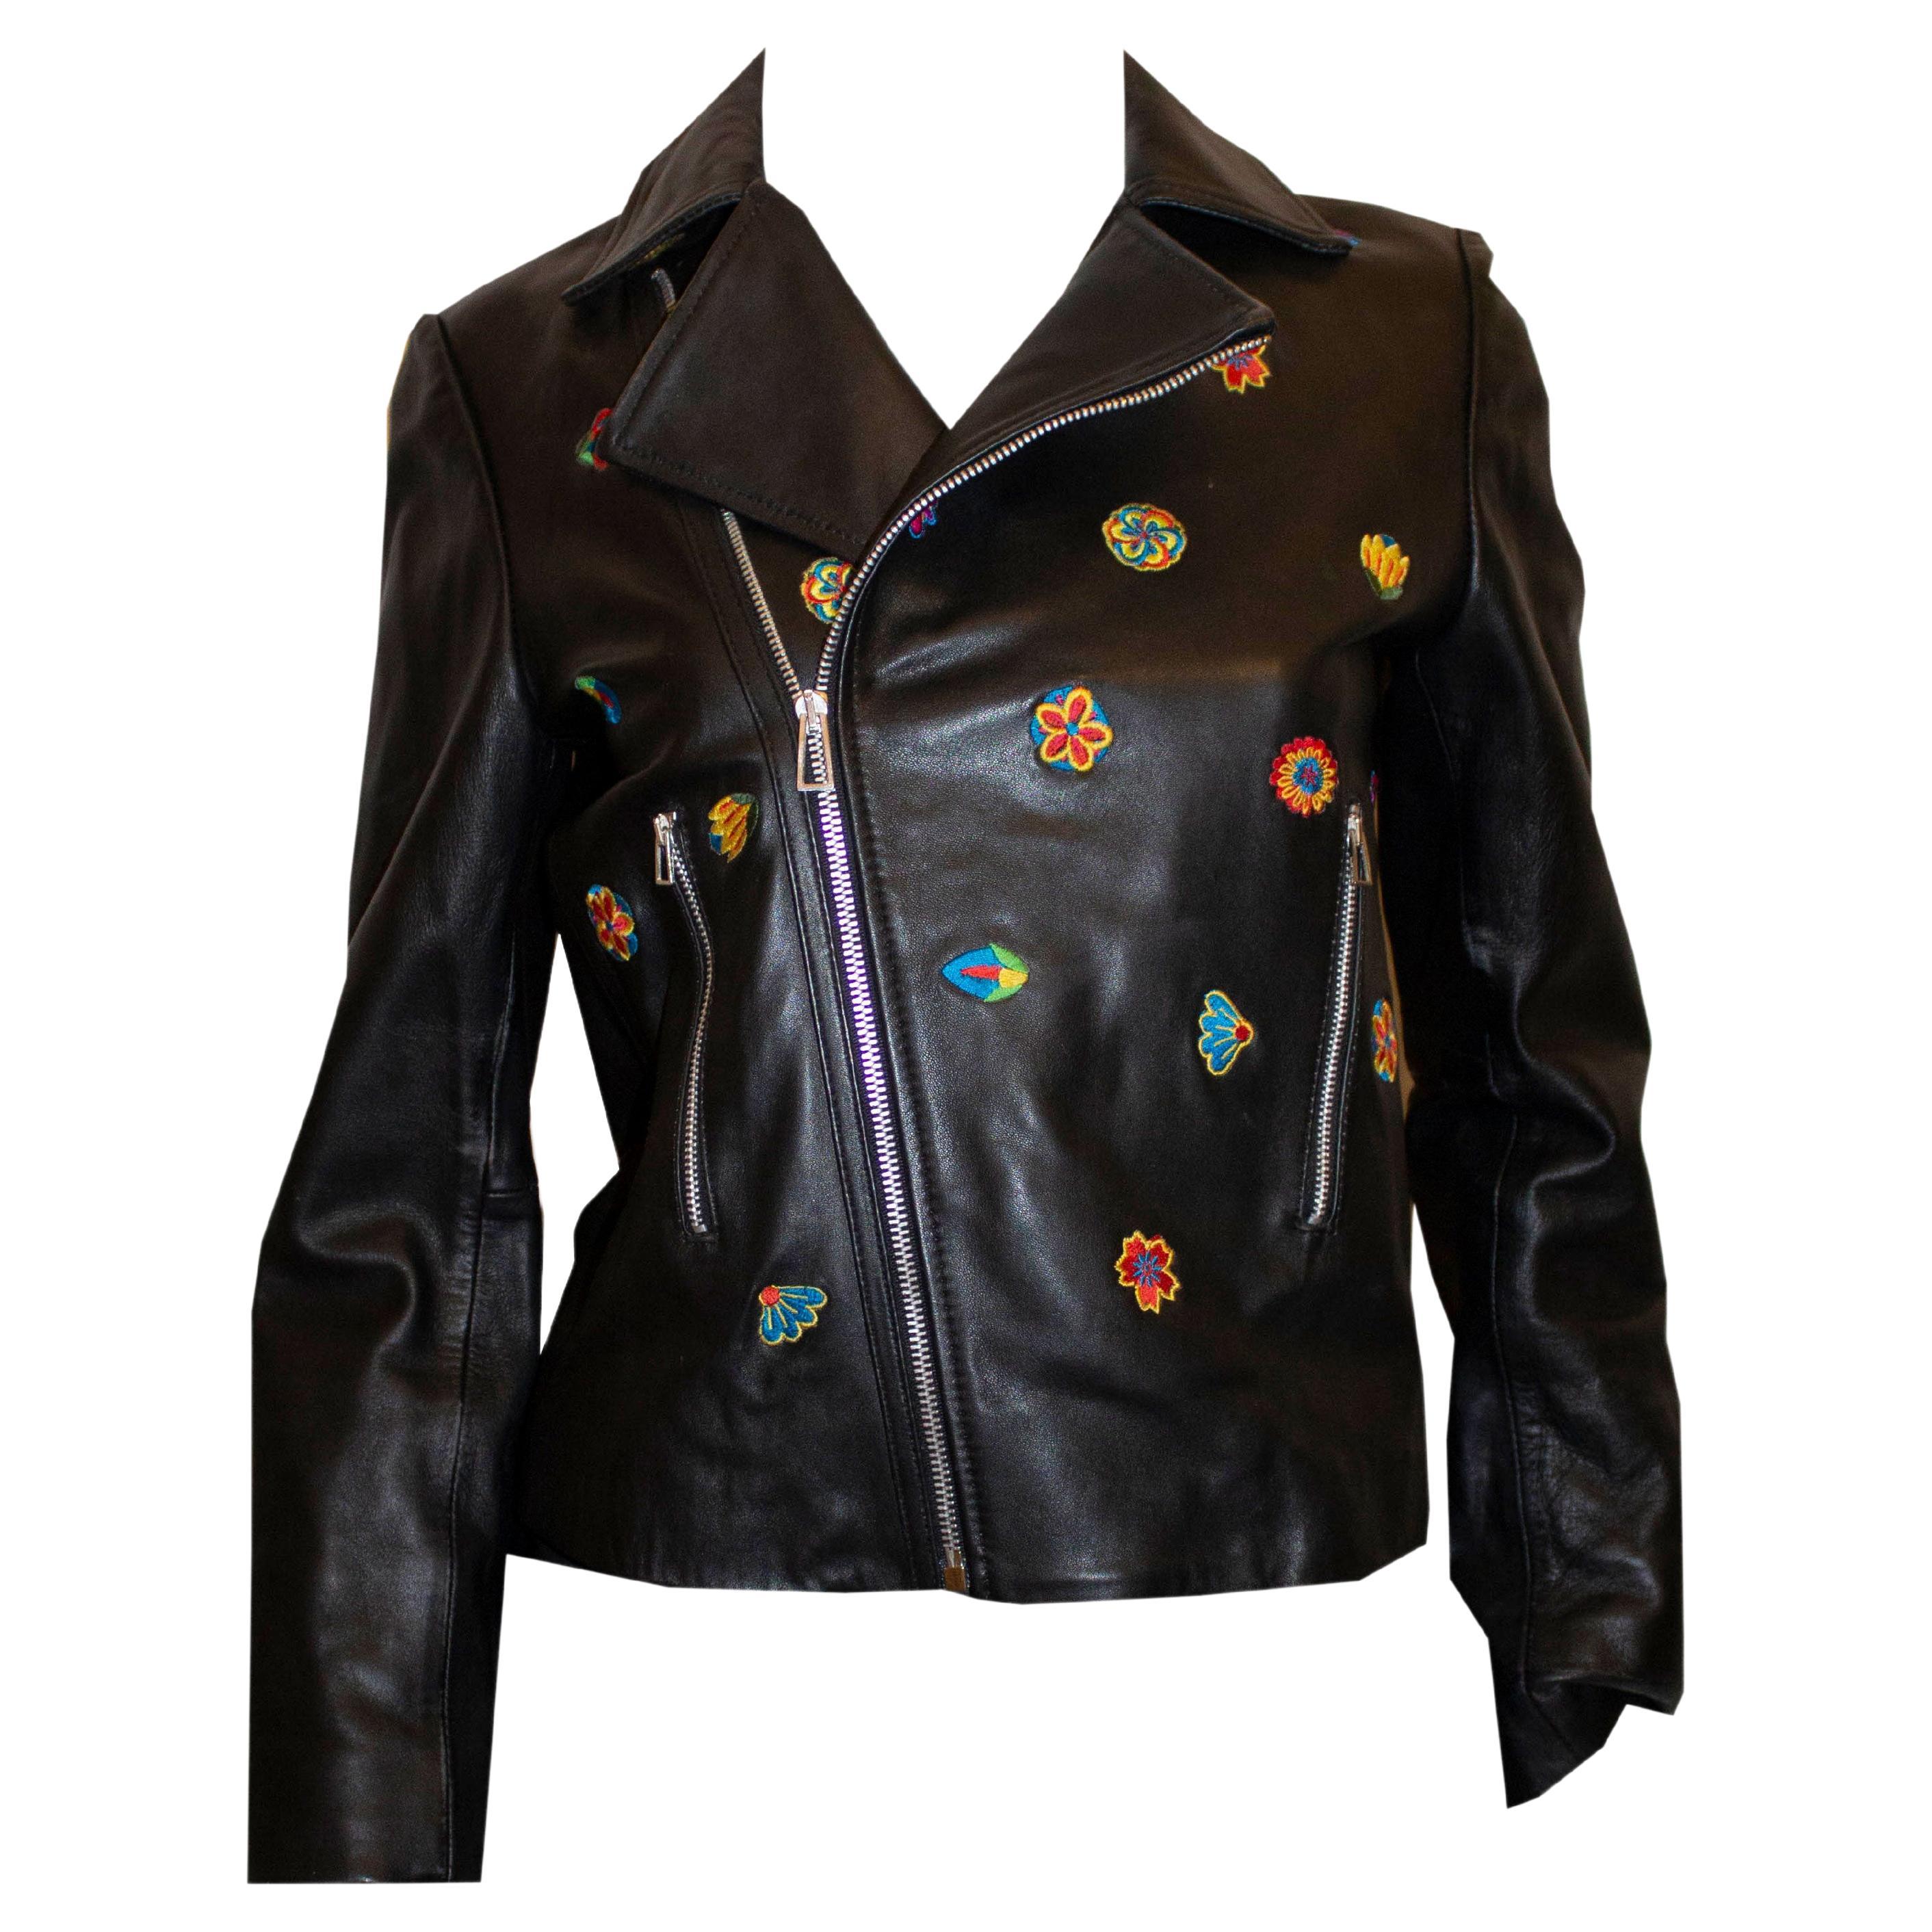 WOMEN FASHION Jackets Embroidery Black/Multicolored M discount 88% NoName vest 